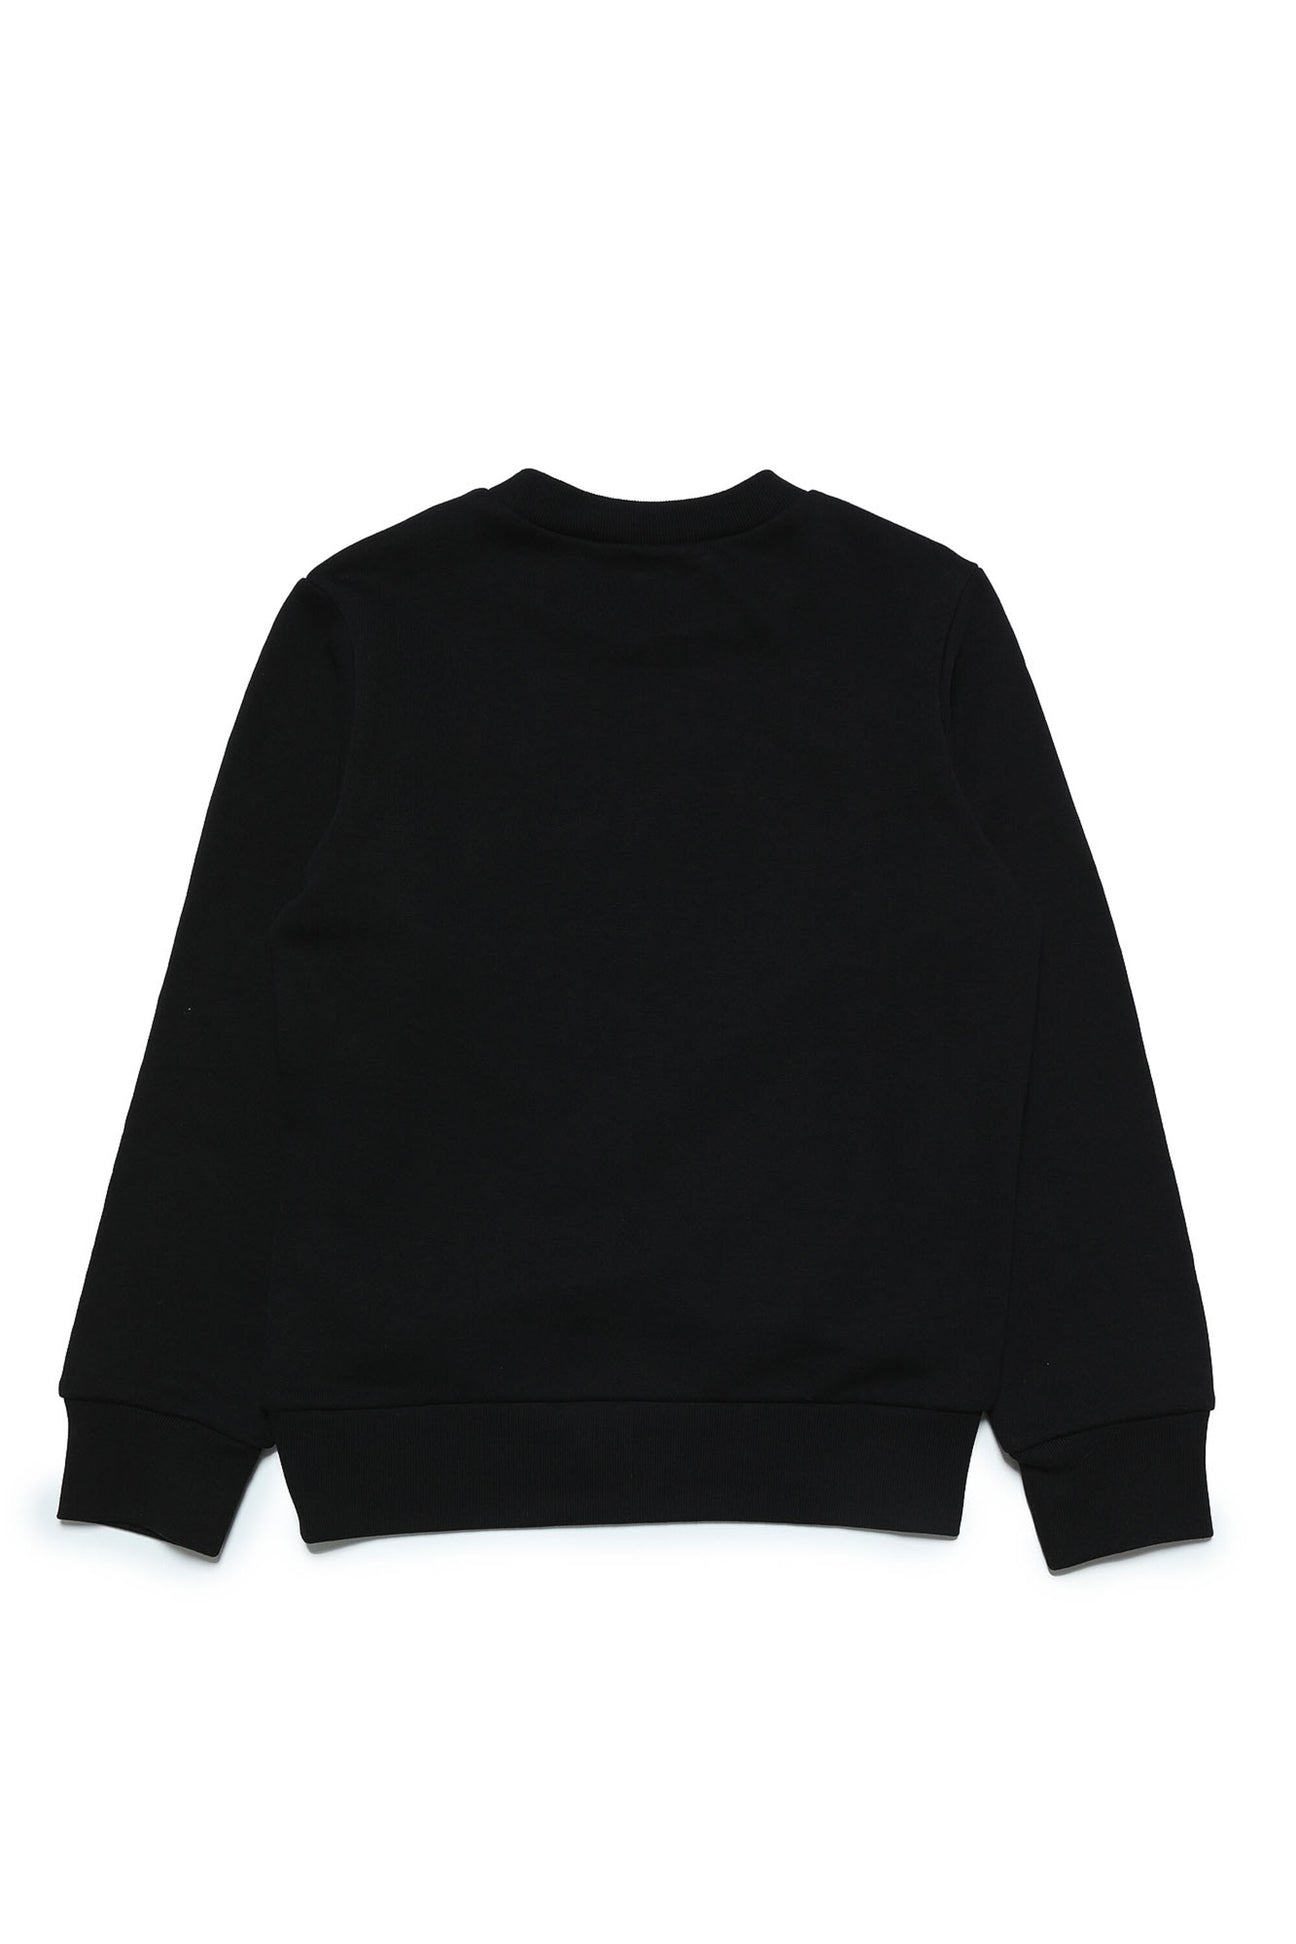 Black cotton crew-neck sweatshirt with logo Black cotton crew-neck sweatshirt with logo